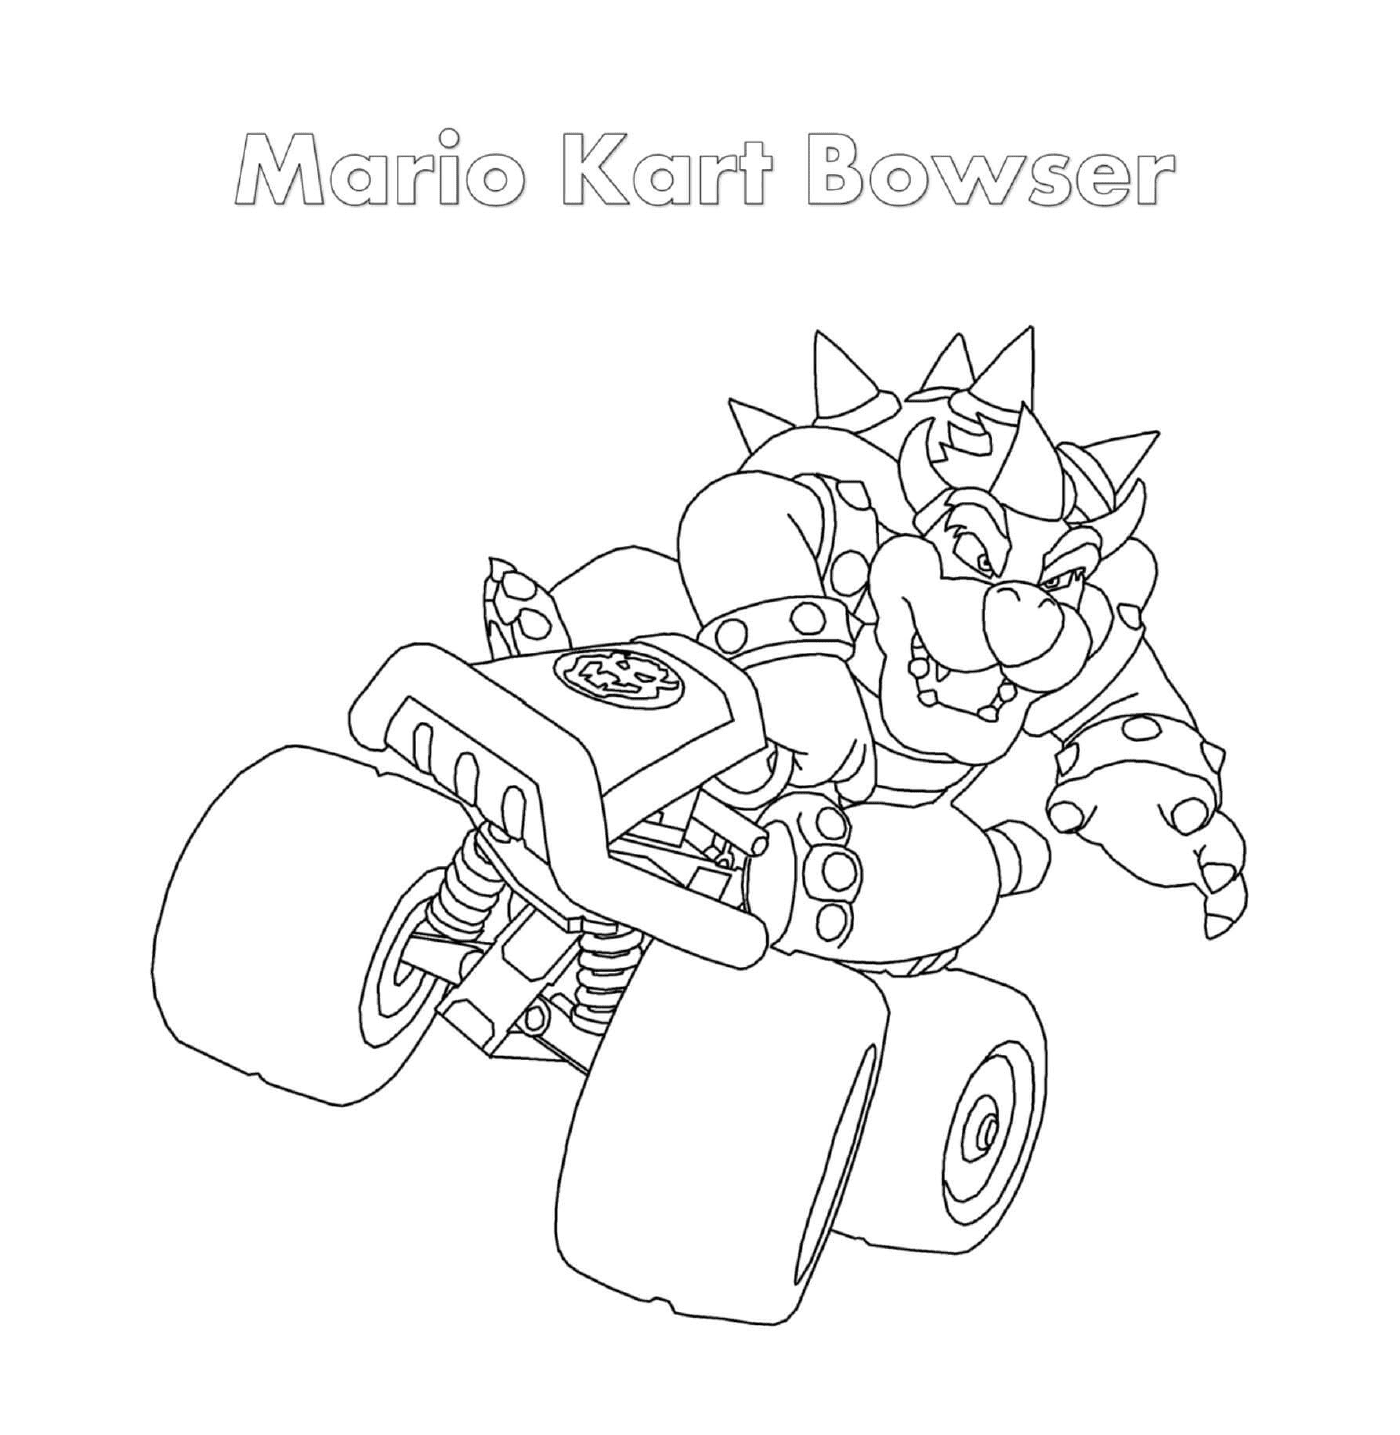  Bowser a Mario Kart 